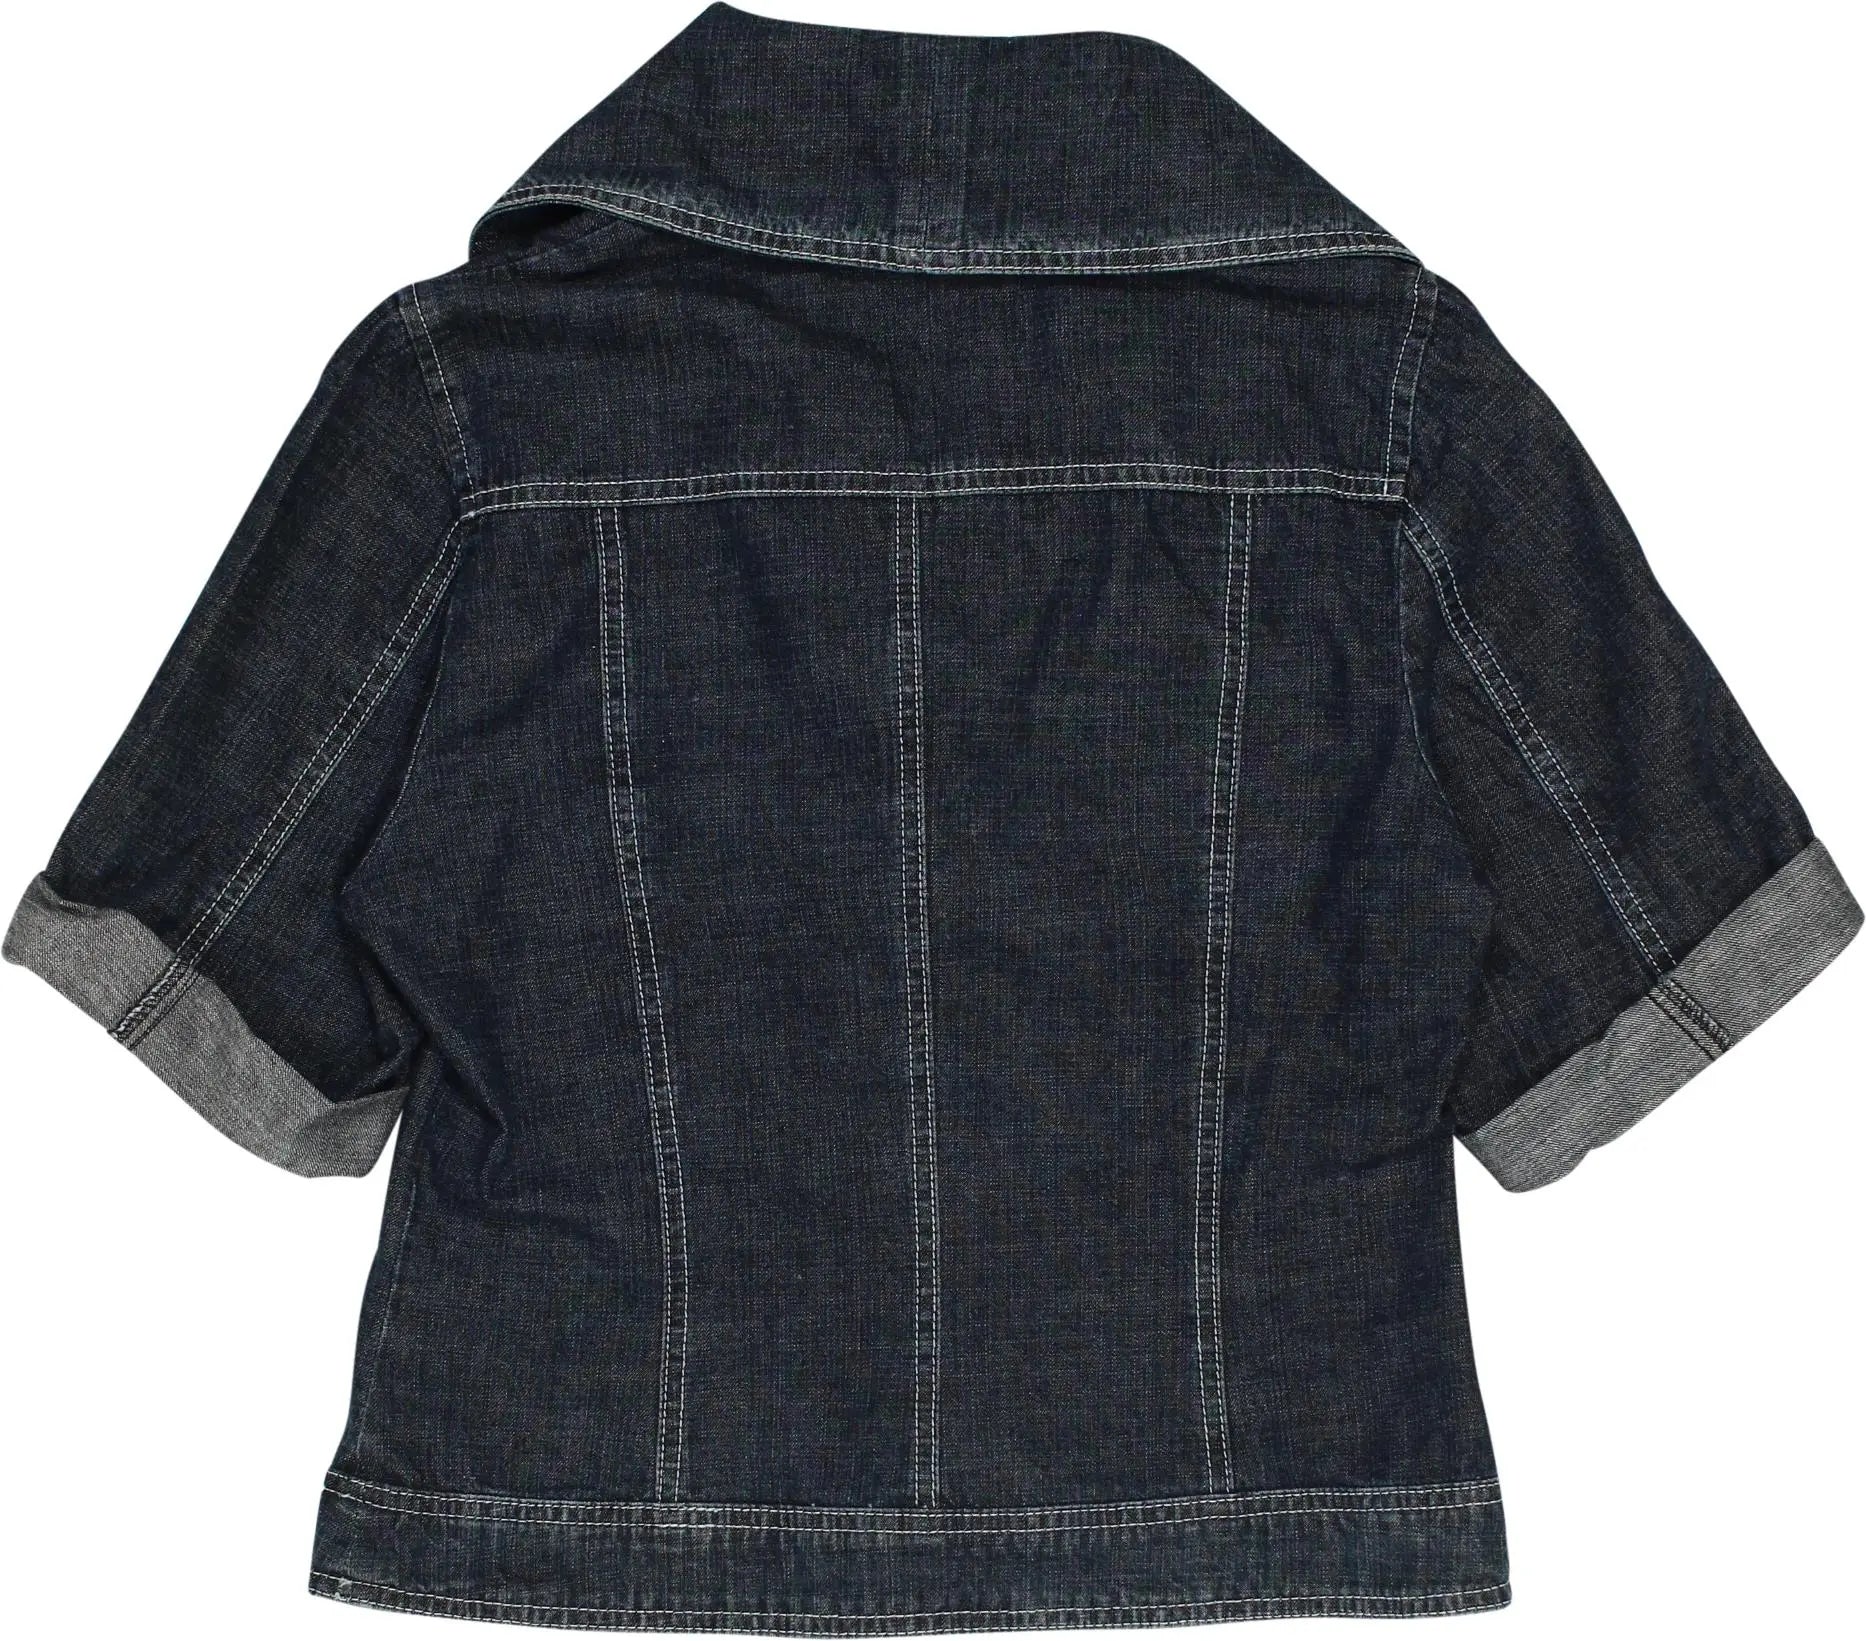 Dreamstar - Denim Jacket- ThriftTale.com - Vintage and second handclothing